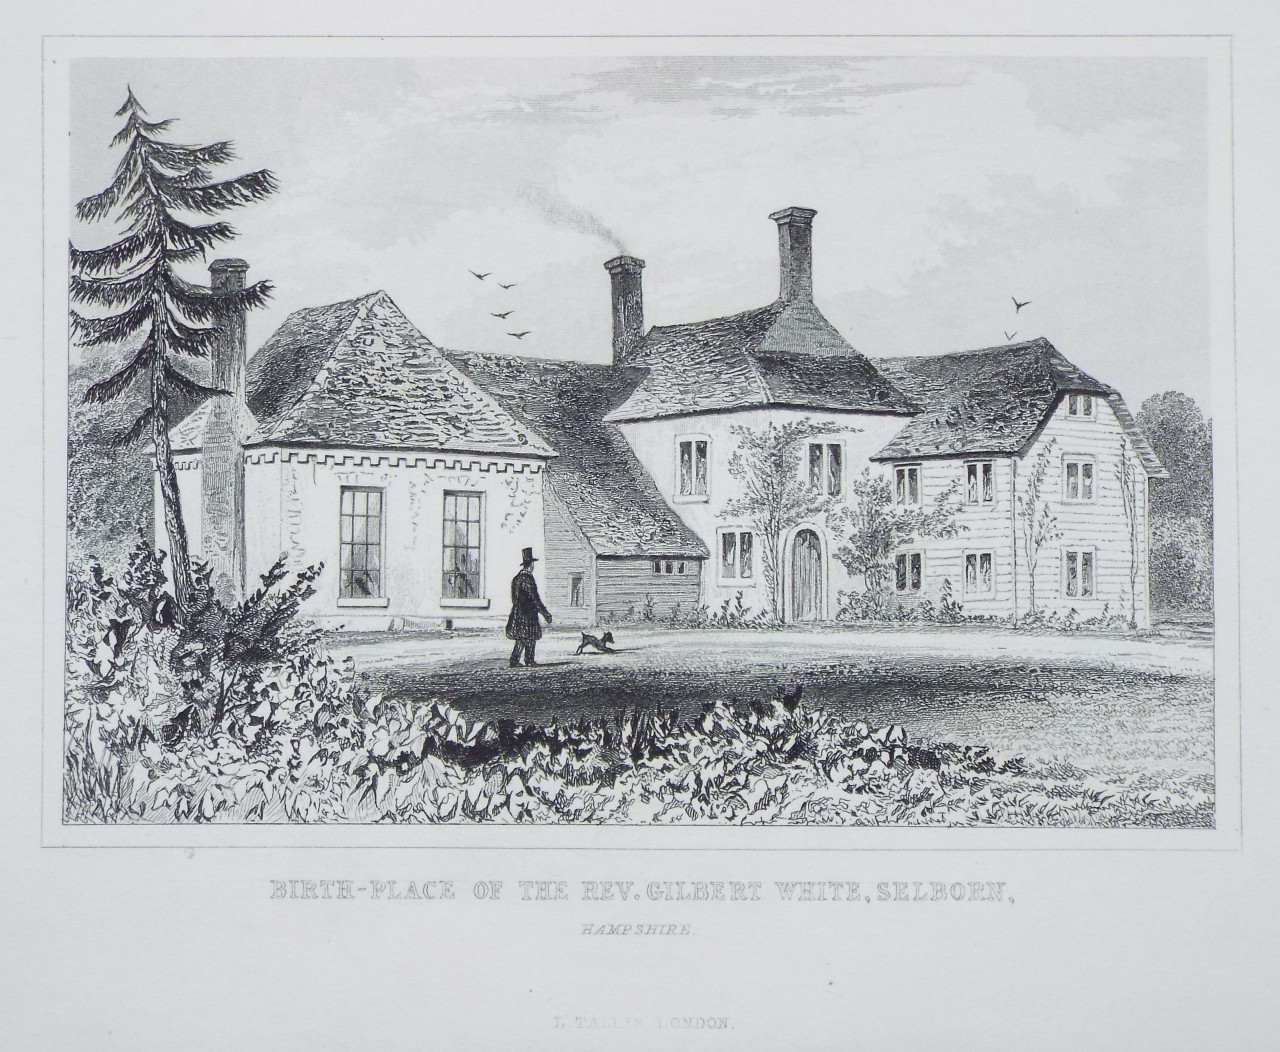 Print - Birth-place of the Rev. Gilbert White, Selborn, Hampshire.